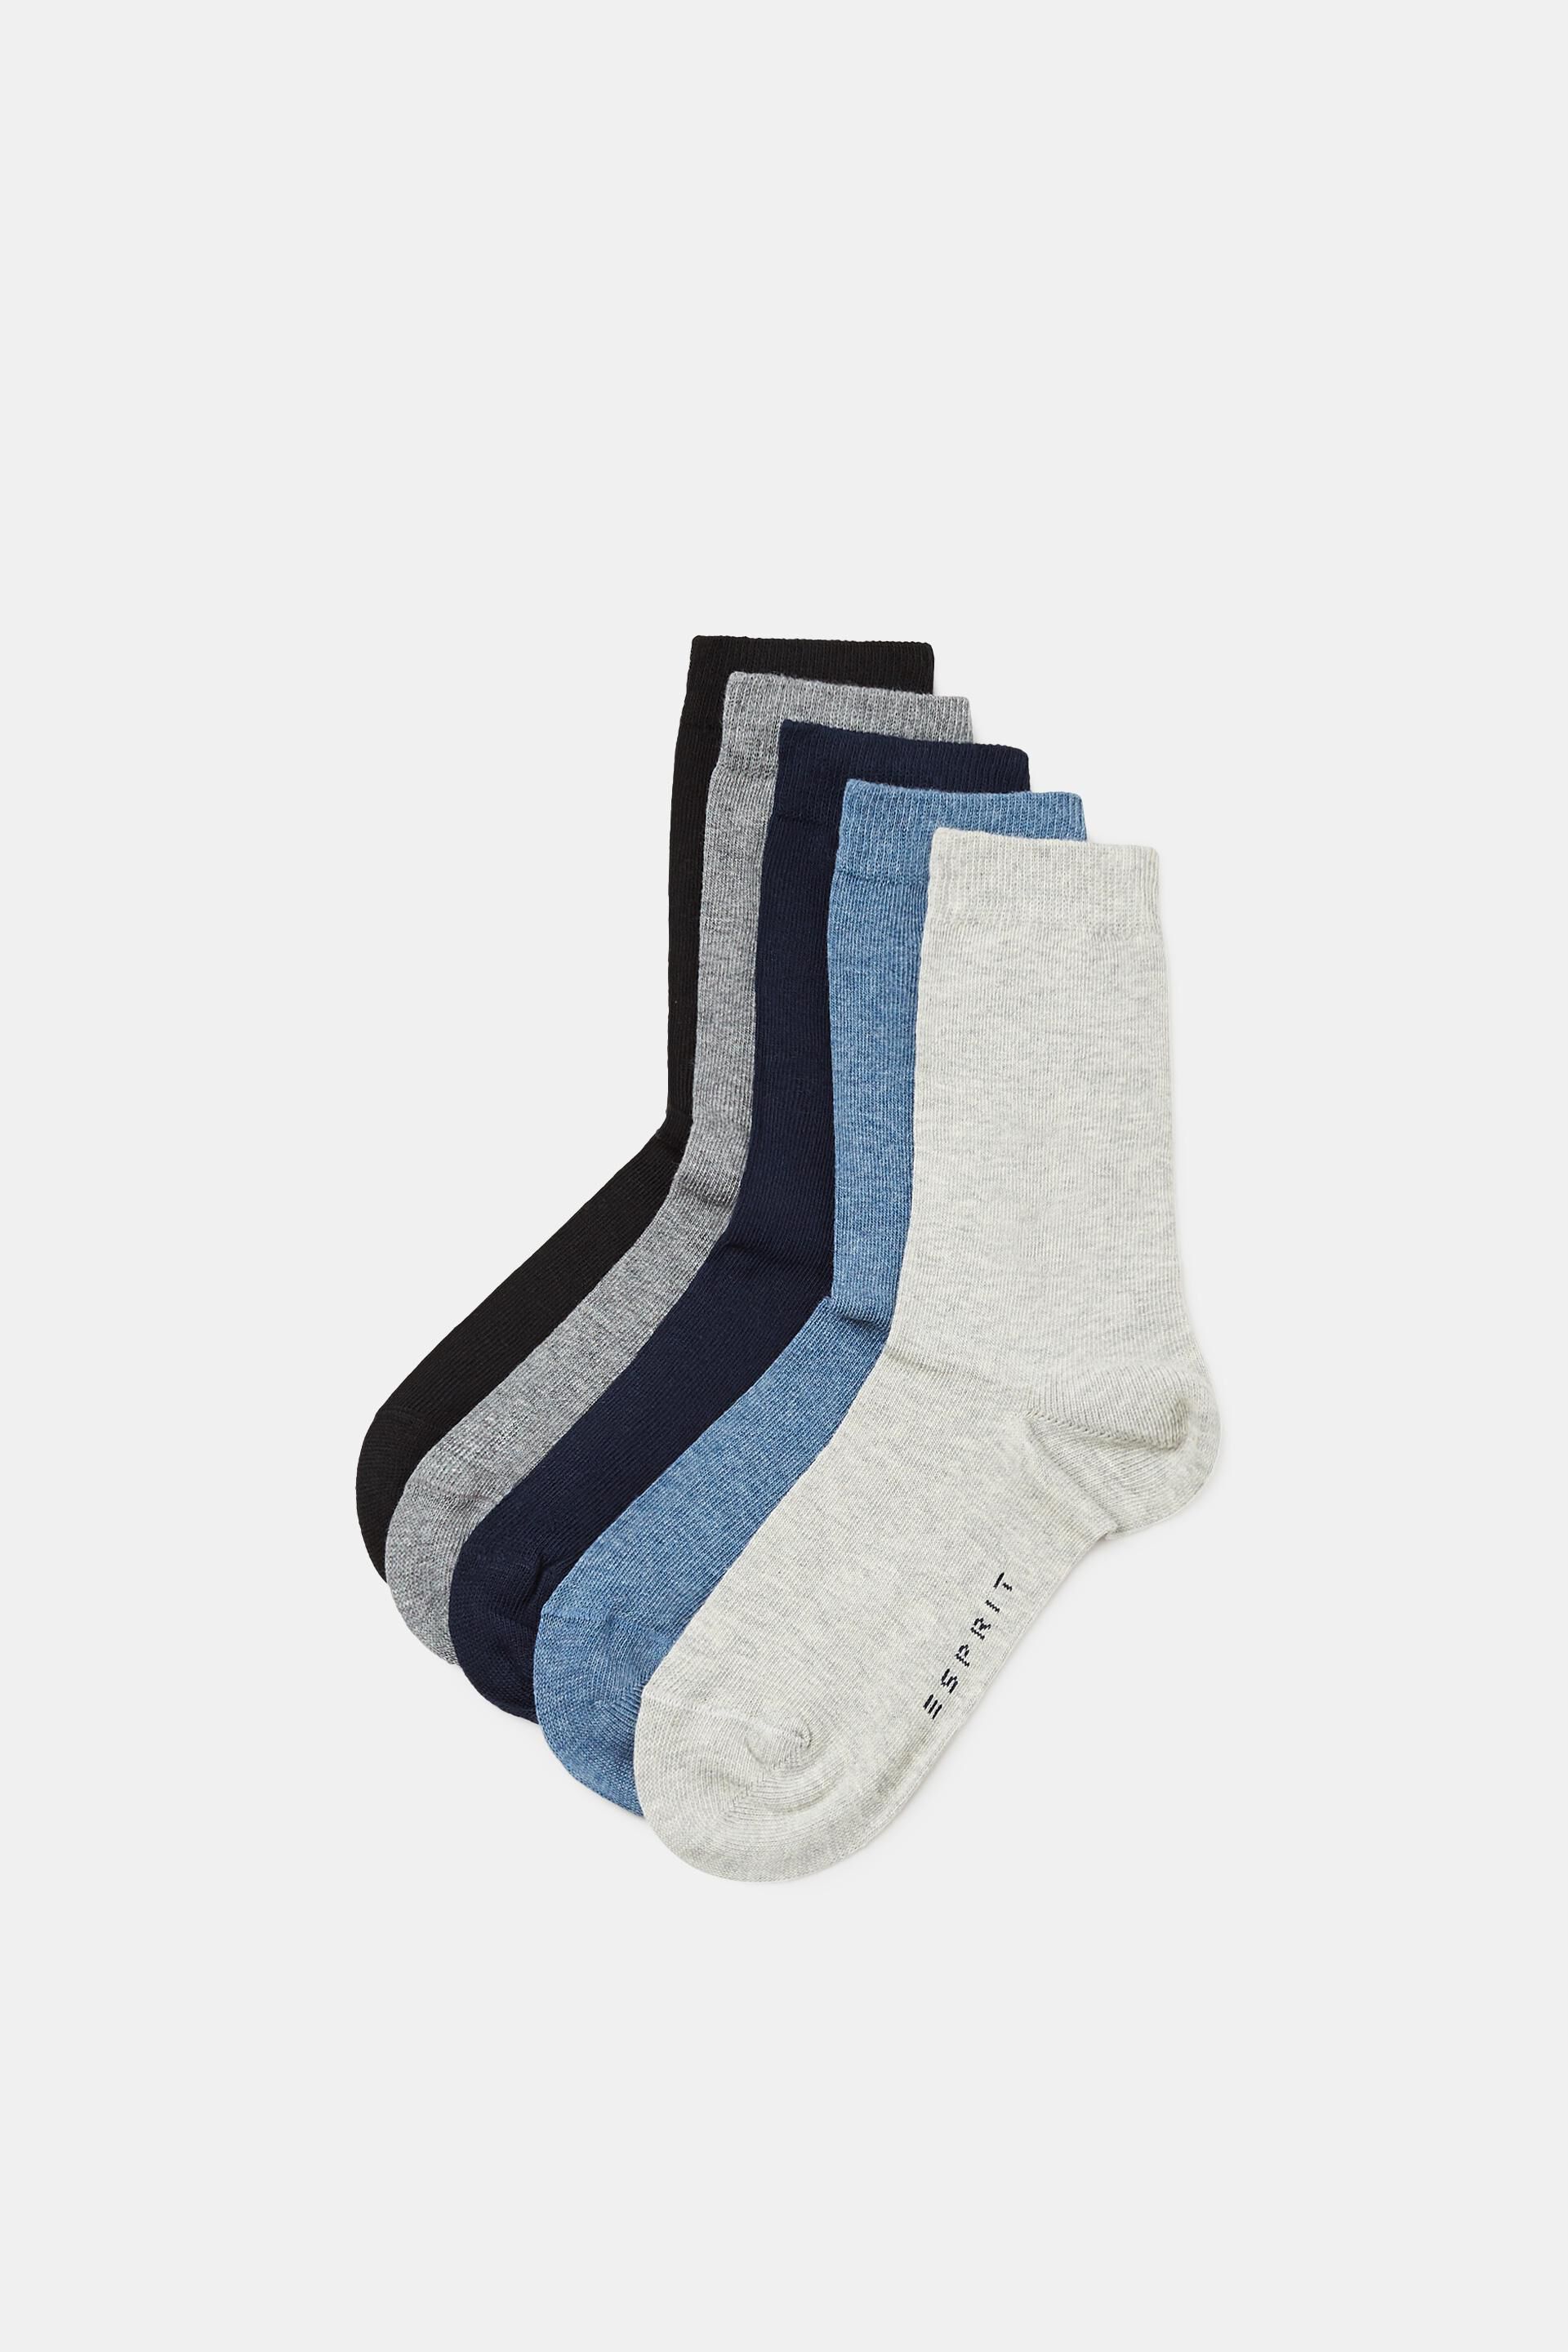 Esprit pack plain-coloured socks Five of